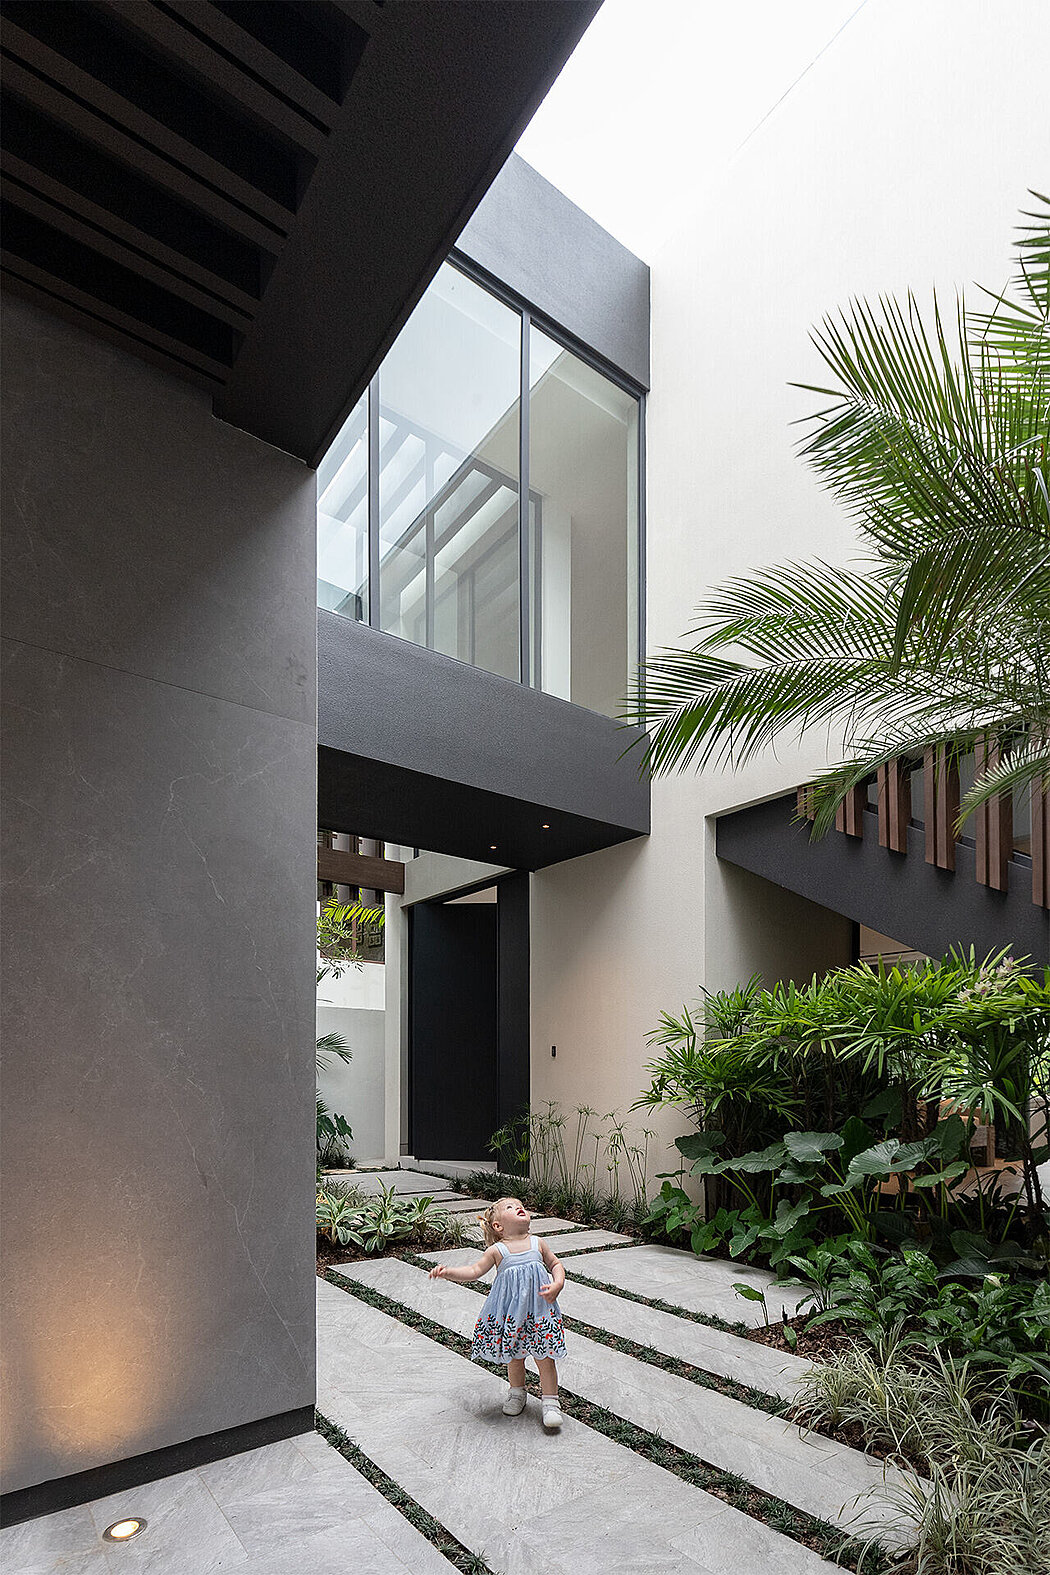 Casa Umbral: A Tropical Oasis by Najas Arquitectos - 6